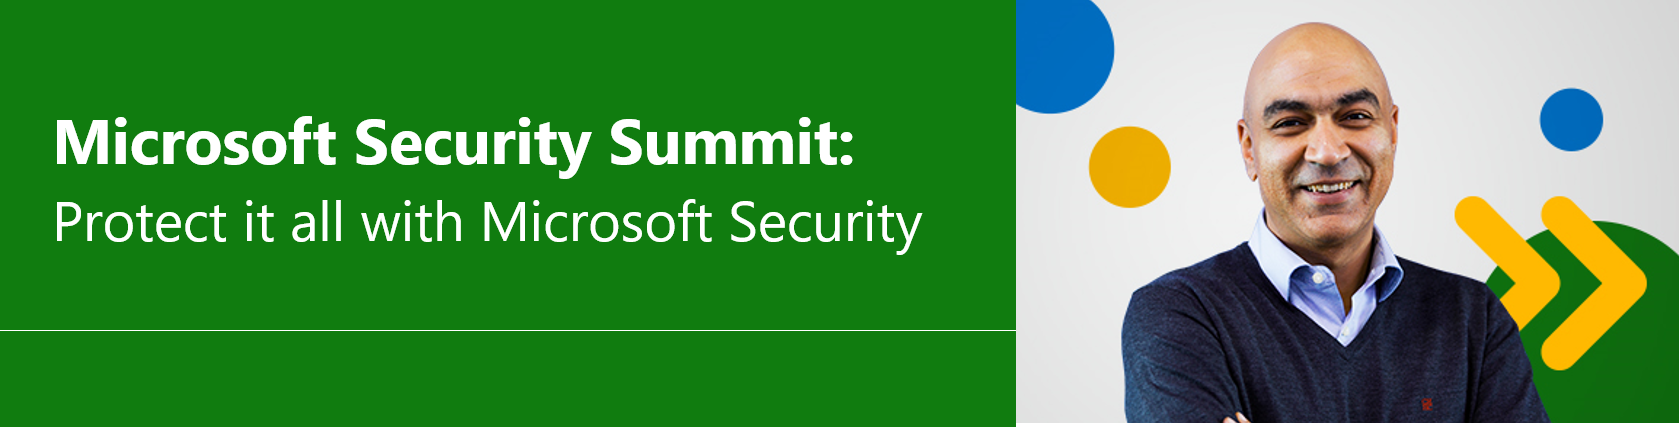 Microsoft Security Summit